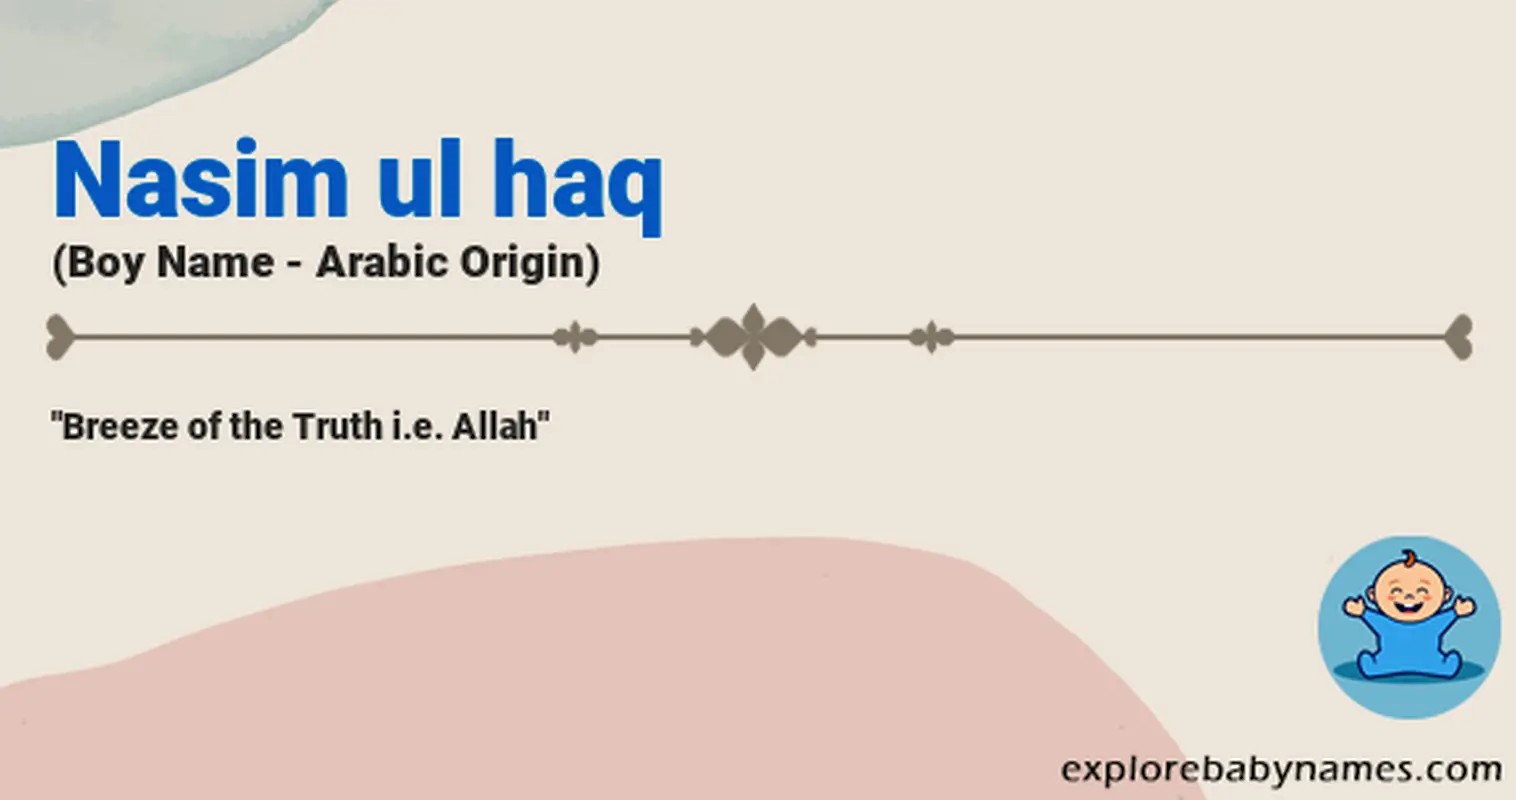 Meaning of Nasim ul haq